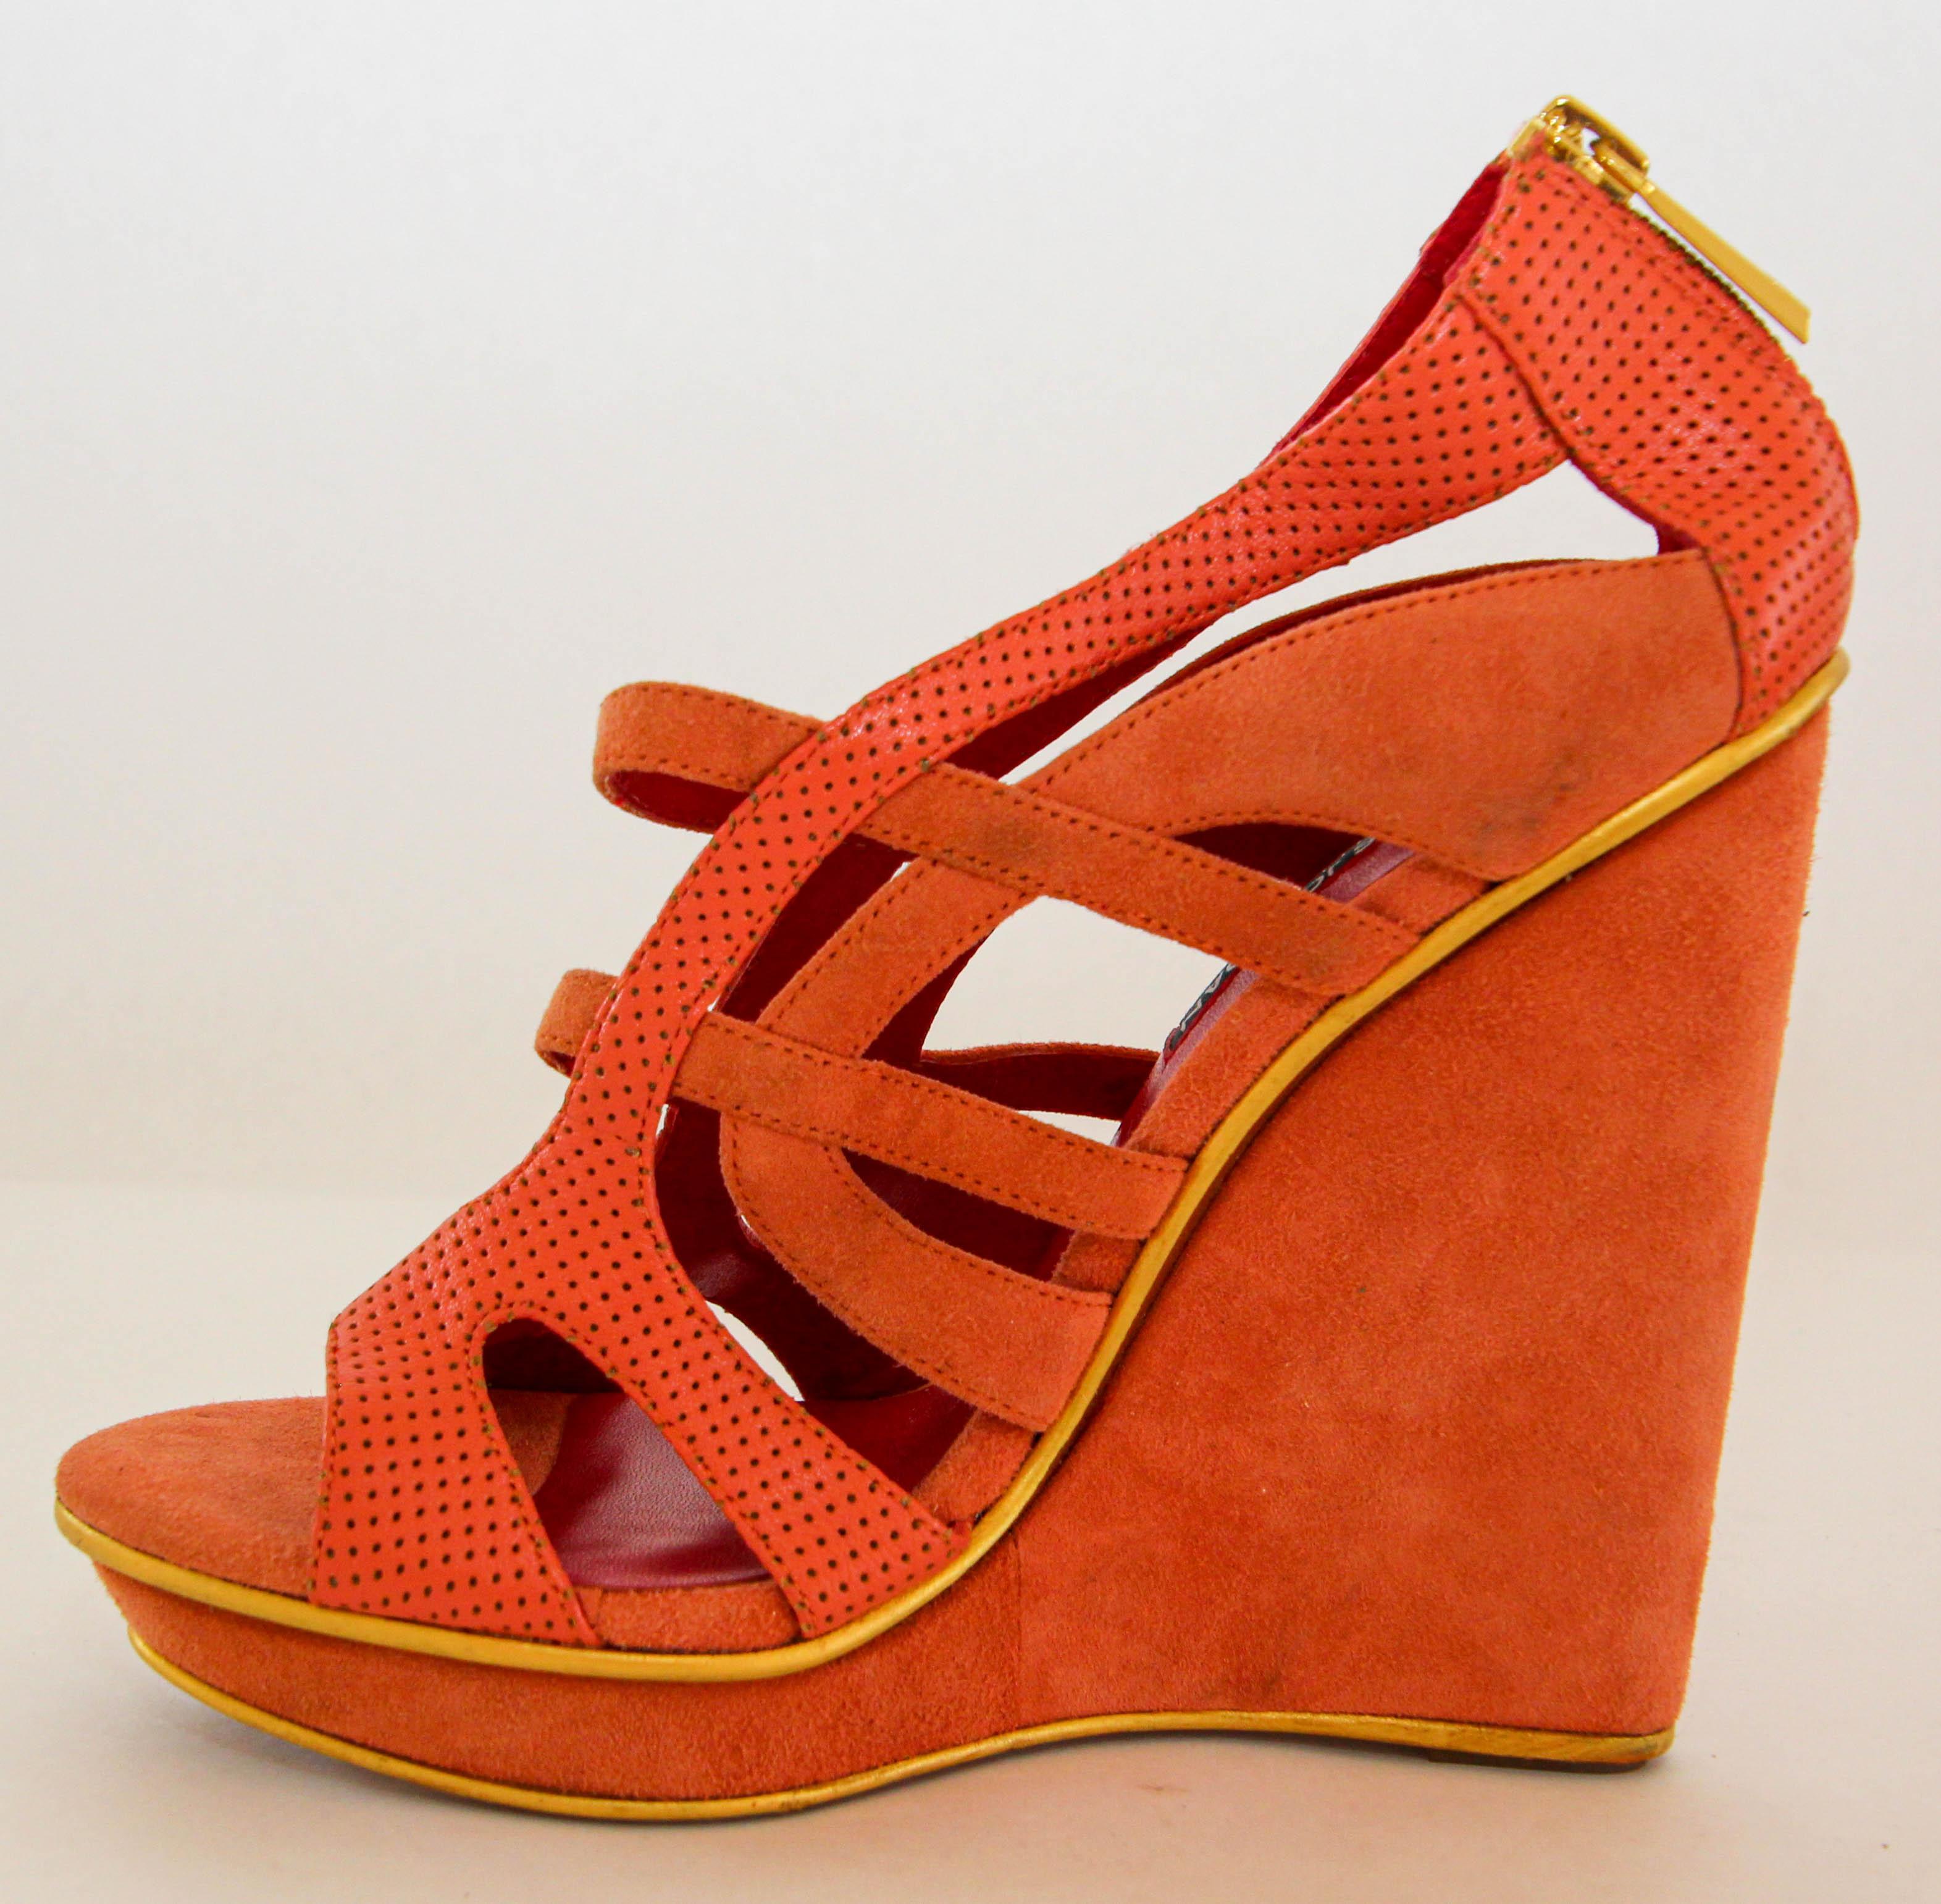 Charles Jourdan Paris Orange Wedge Sandals Size US 6 EU 36 For Sale 5